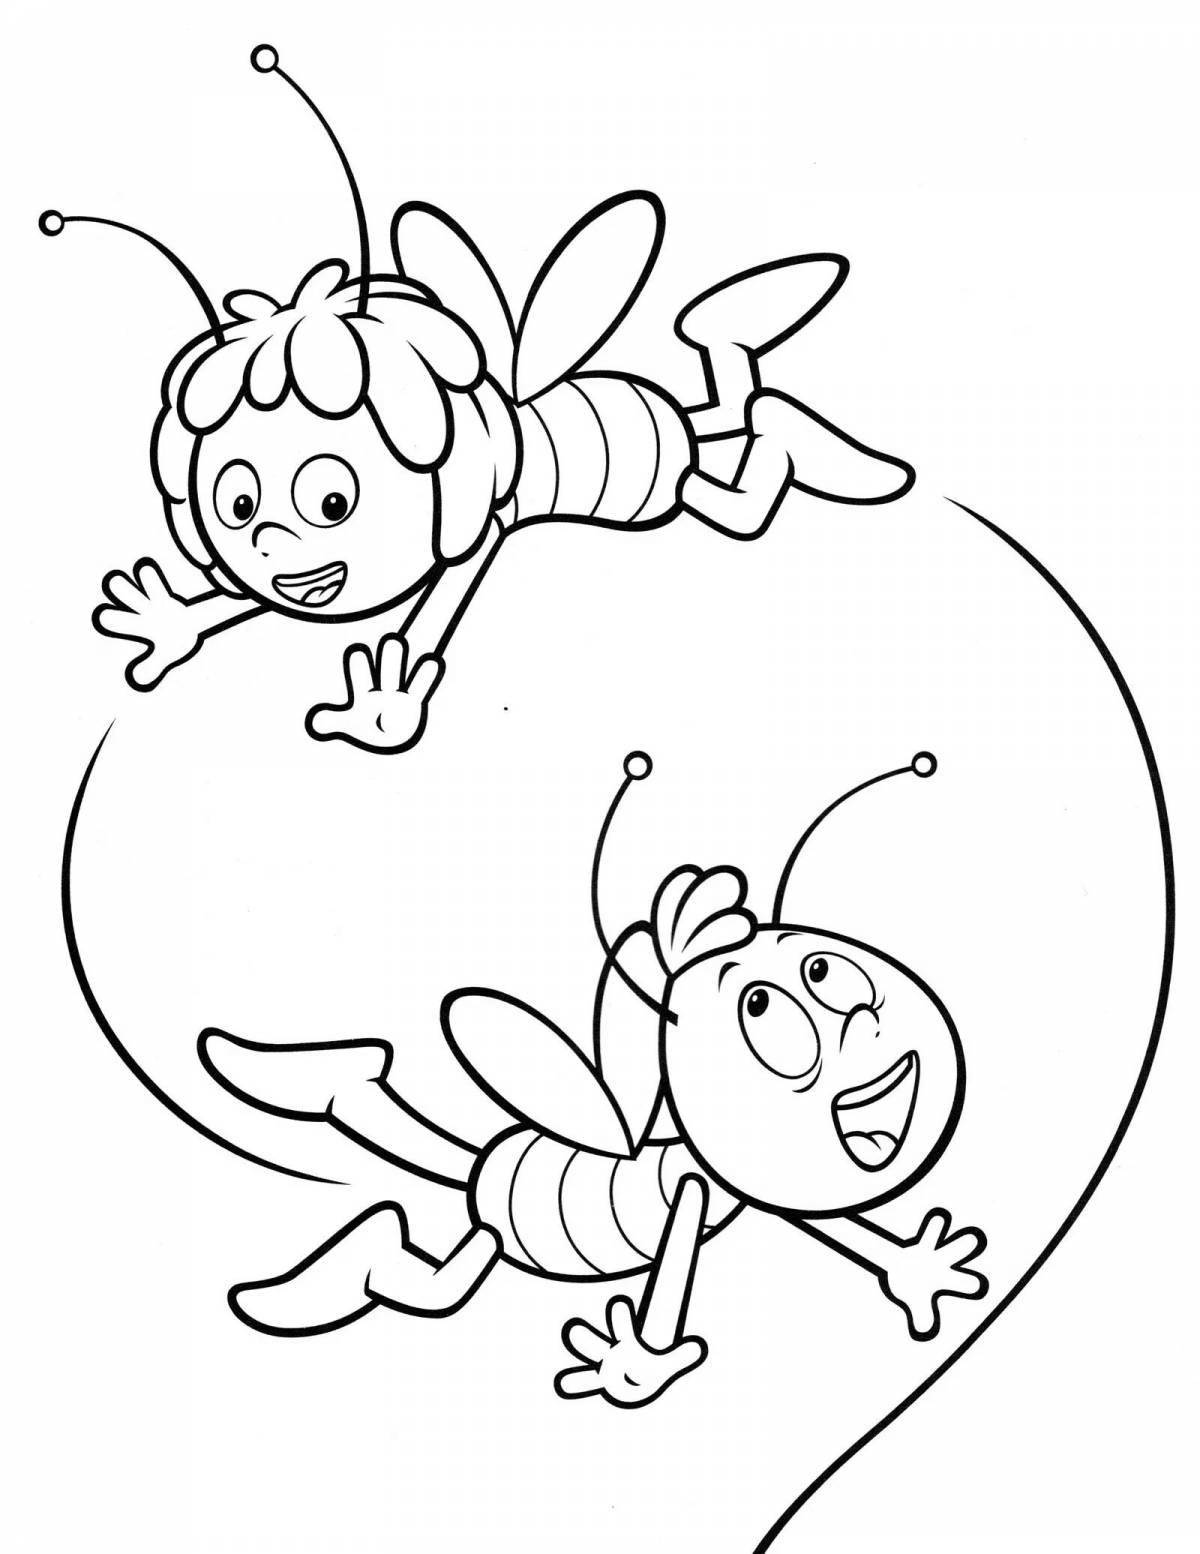 Maya's happy bee coloring book for kids